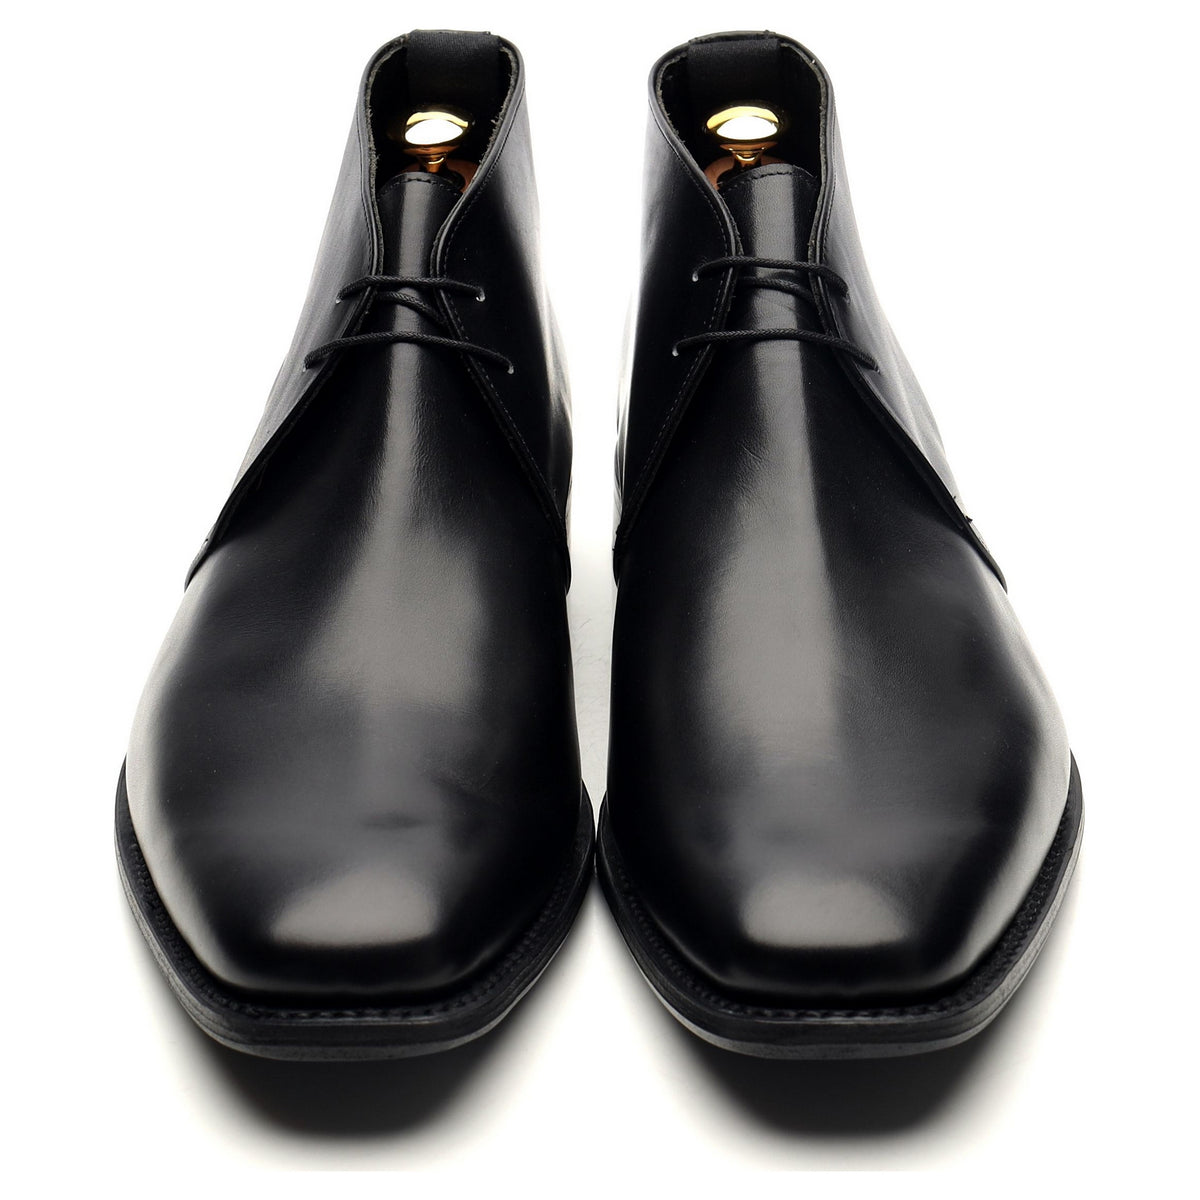 Black Leather Chukka Boots UK 10.5